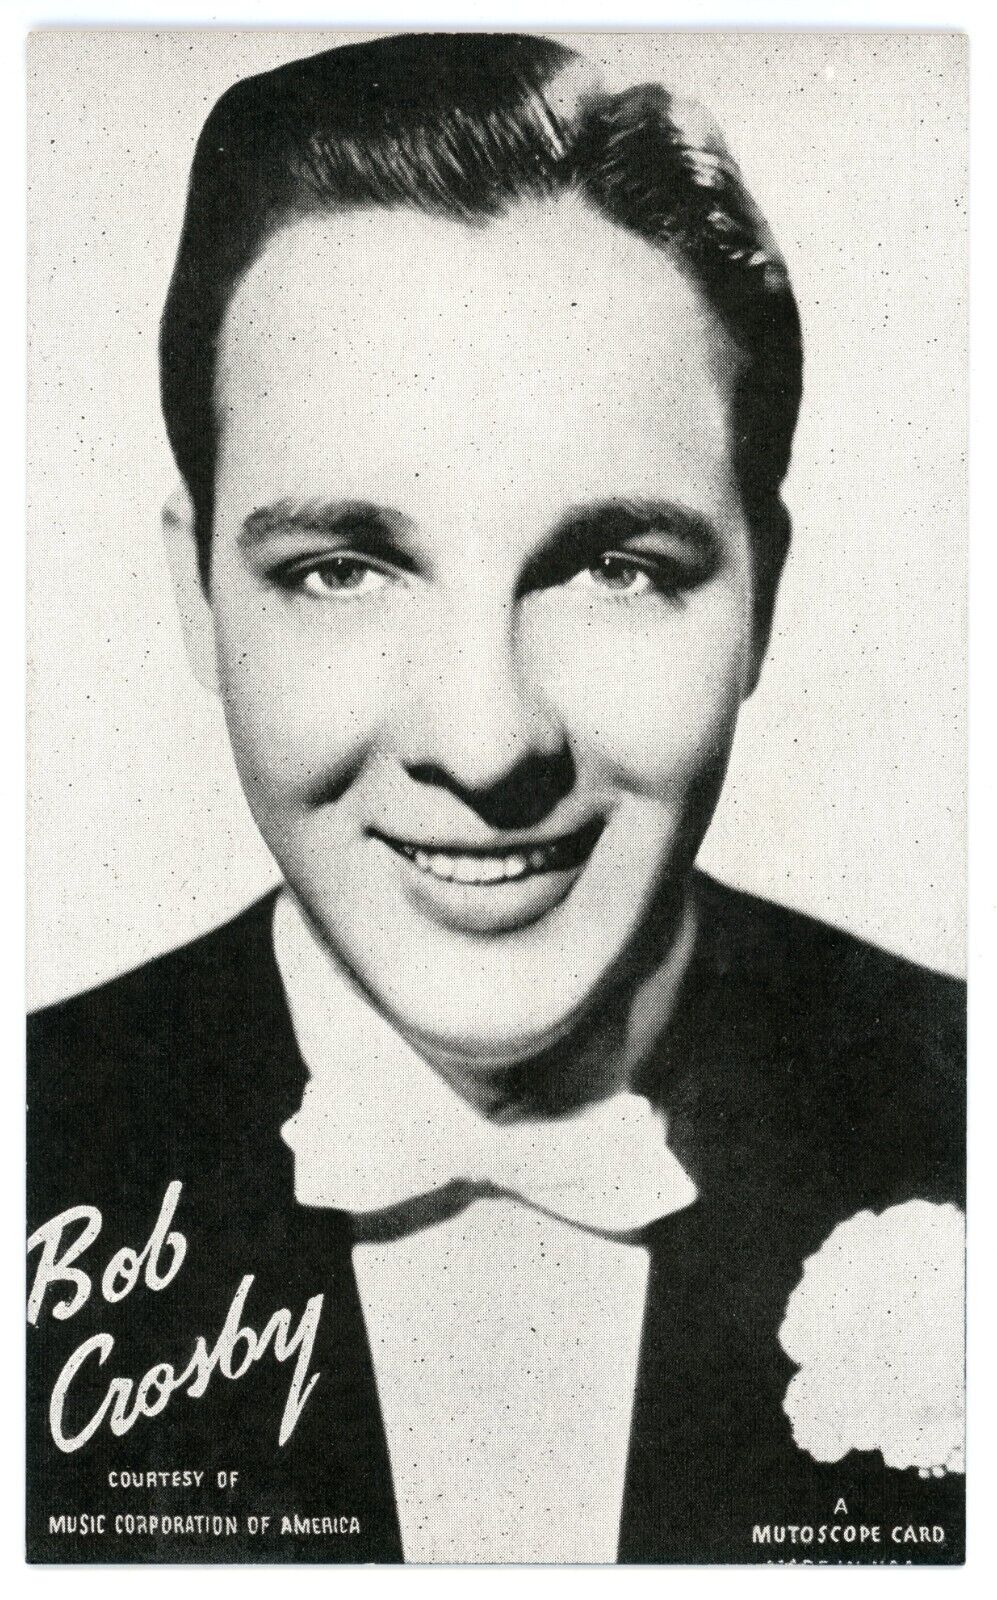 Bob Crosby 1940's MUTOSCOPE POSTCARD-MUSIC CORPORATION OF AMERICA